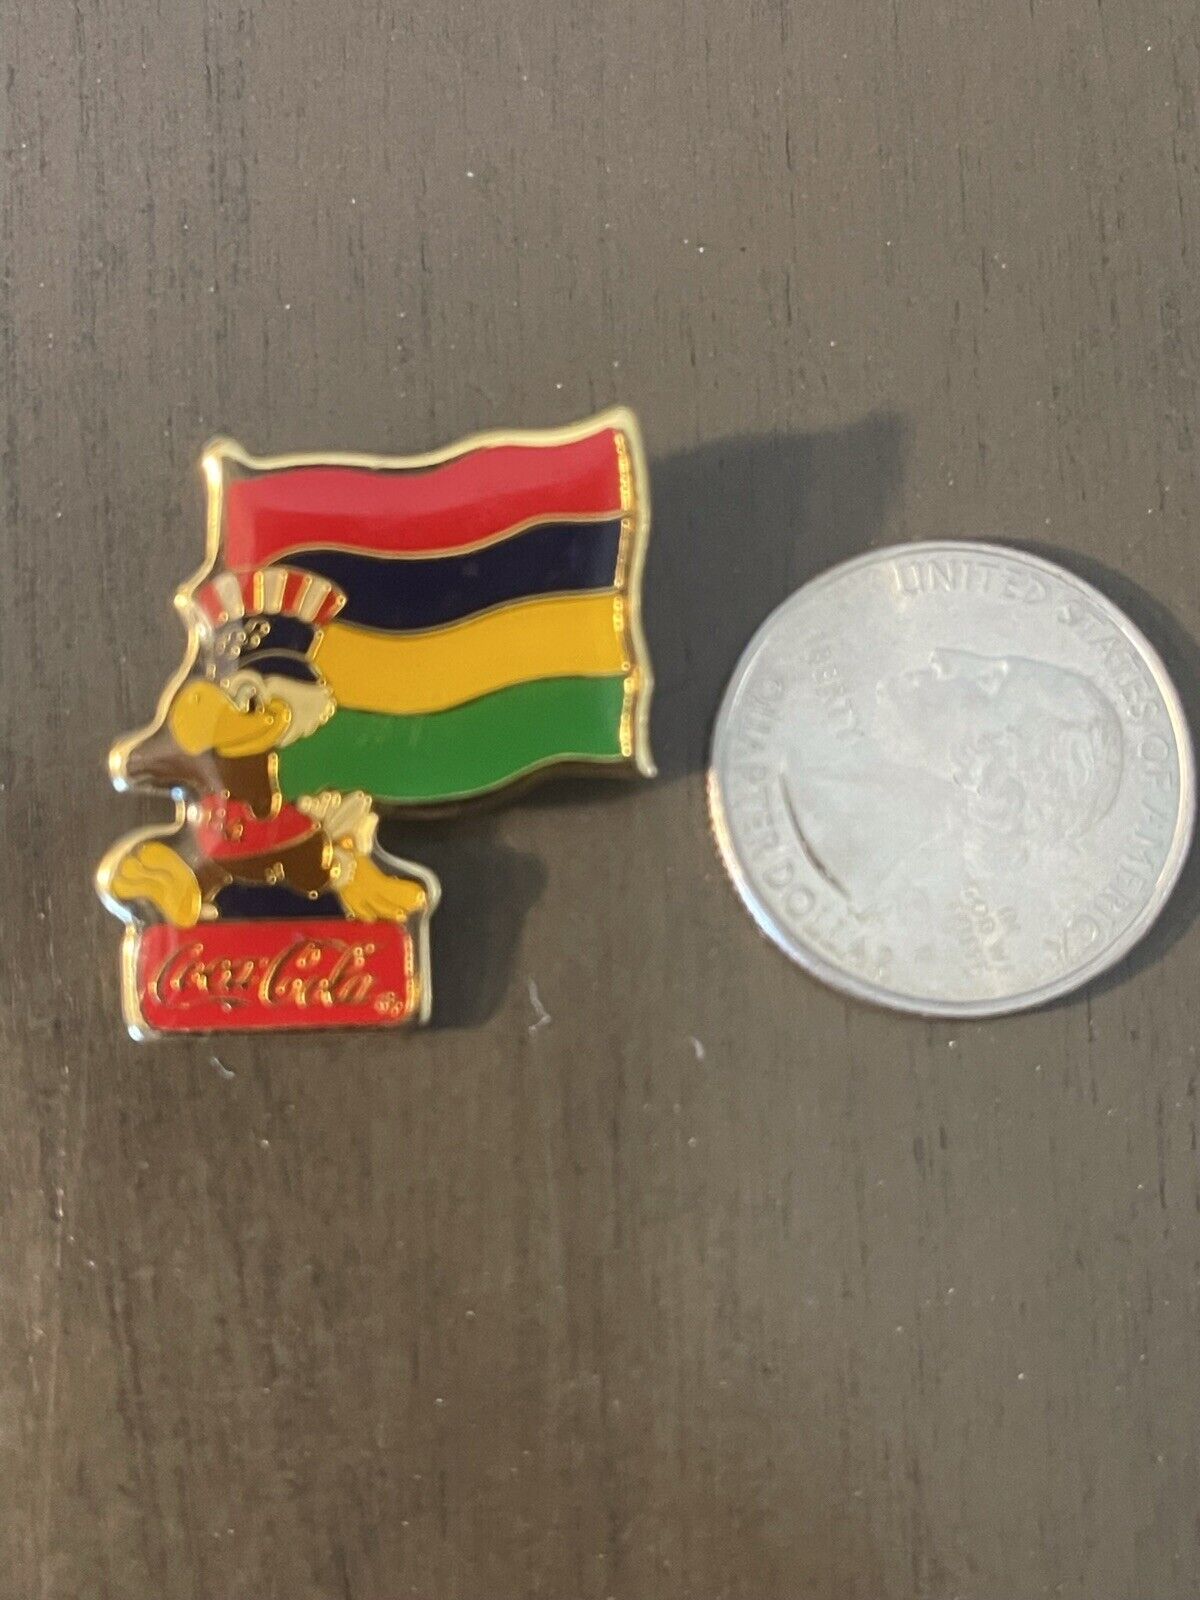 Coca Cola Pin “Mauritias” 1984 Olympics International Flag Pin Series Los